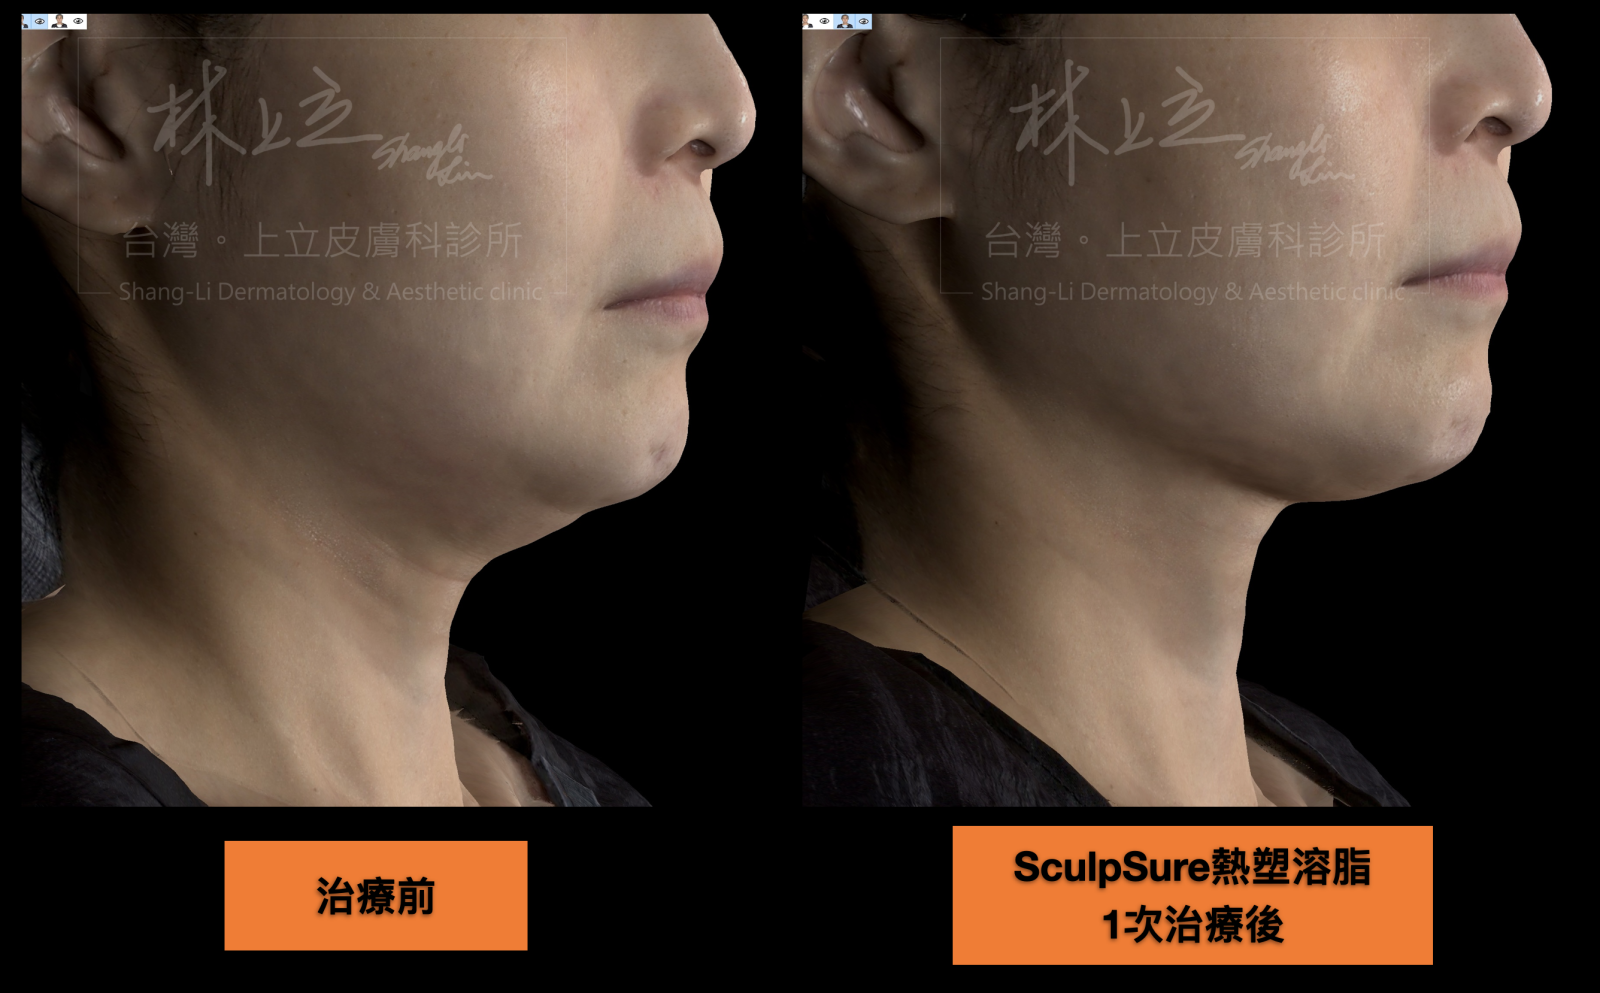 SculpSure熱塑溶脂用於消除雙下巴有很好的效果